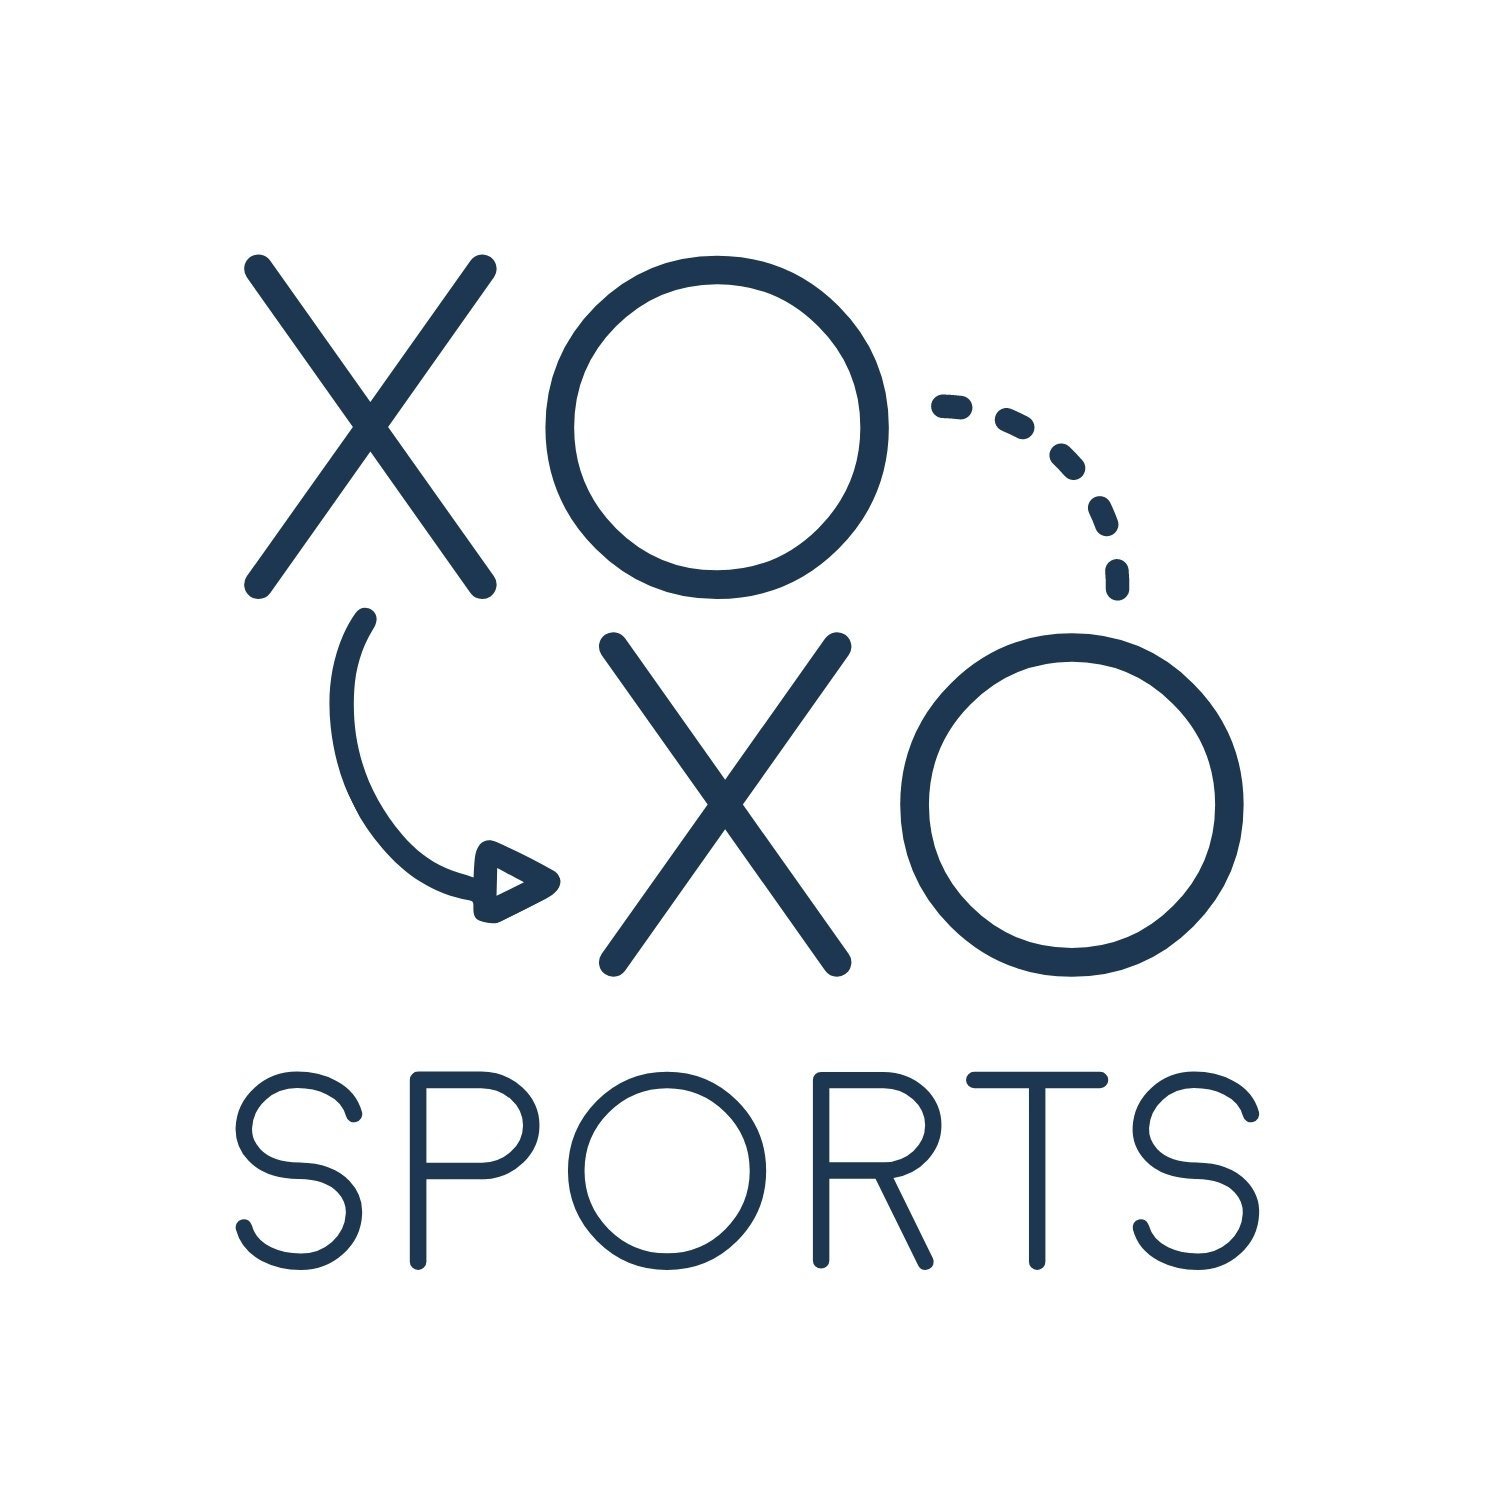 xoxo sports